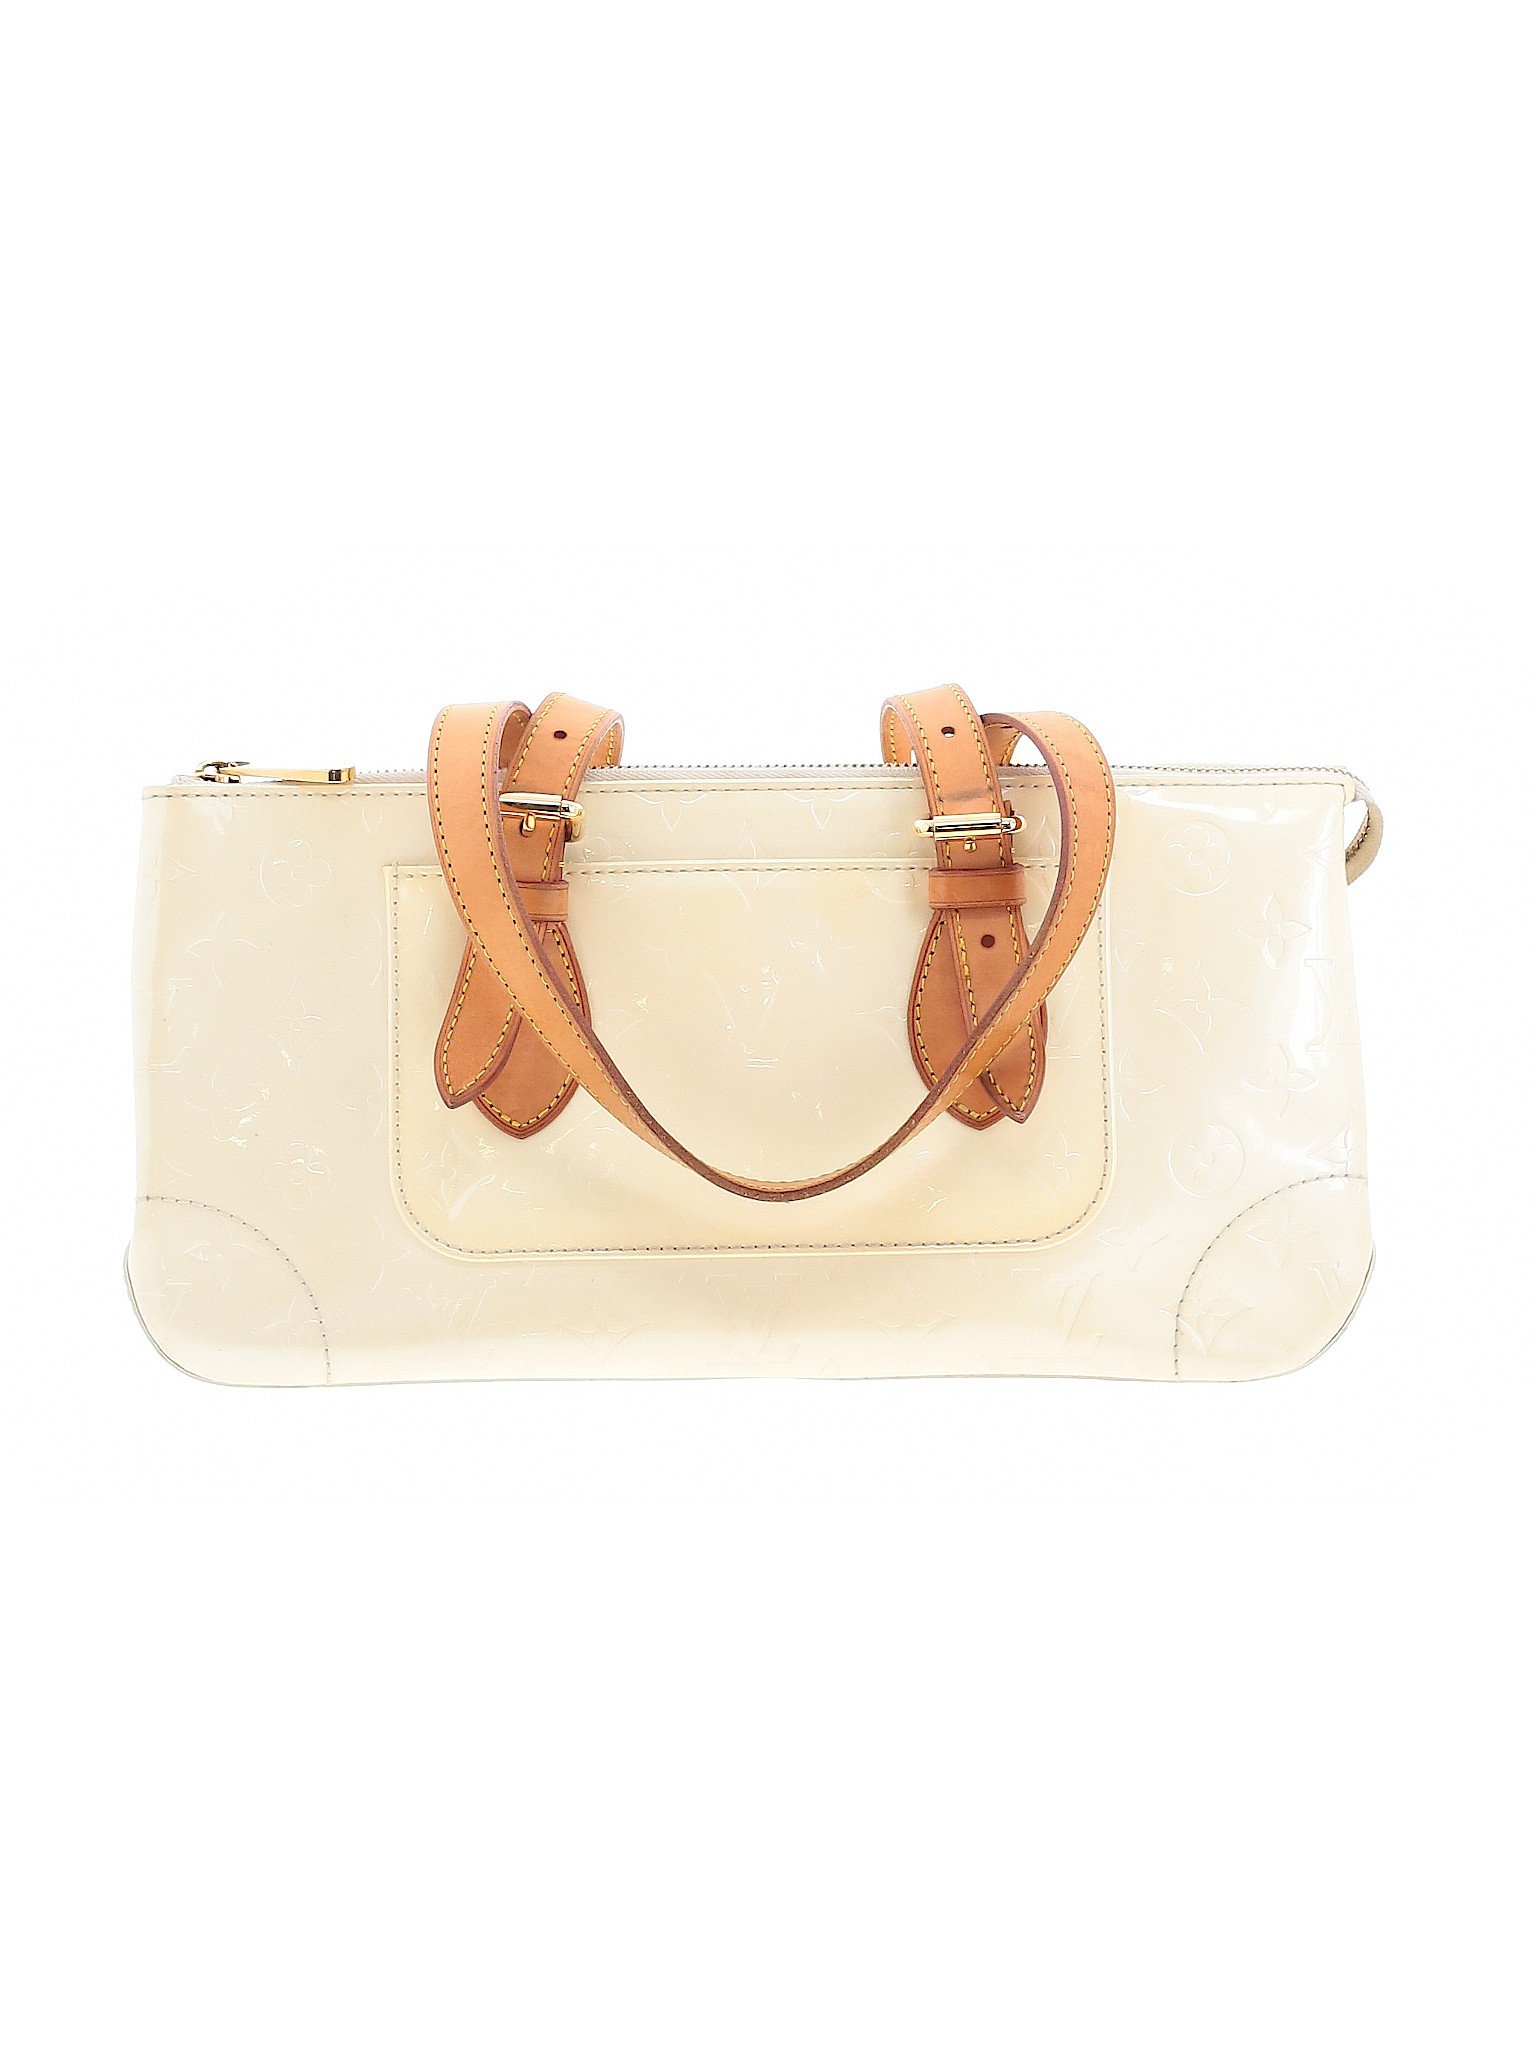 Louis Vuitton Women Ivory Leather Shoulder Bag One Size | eBay